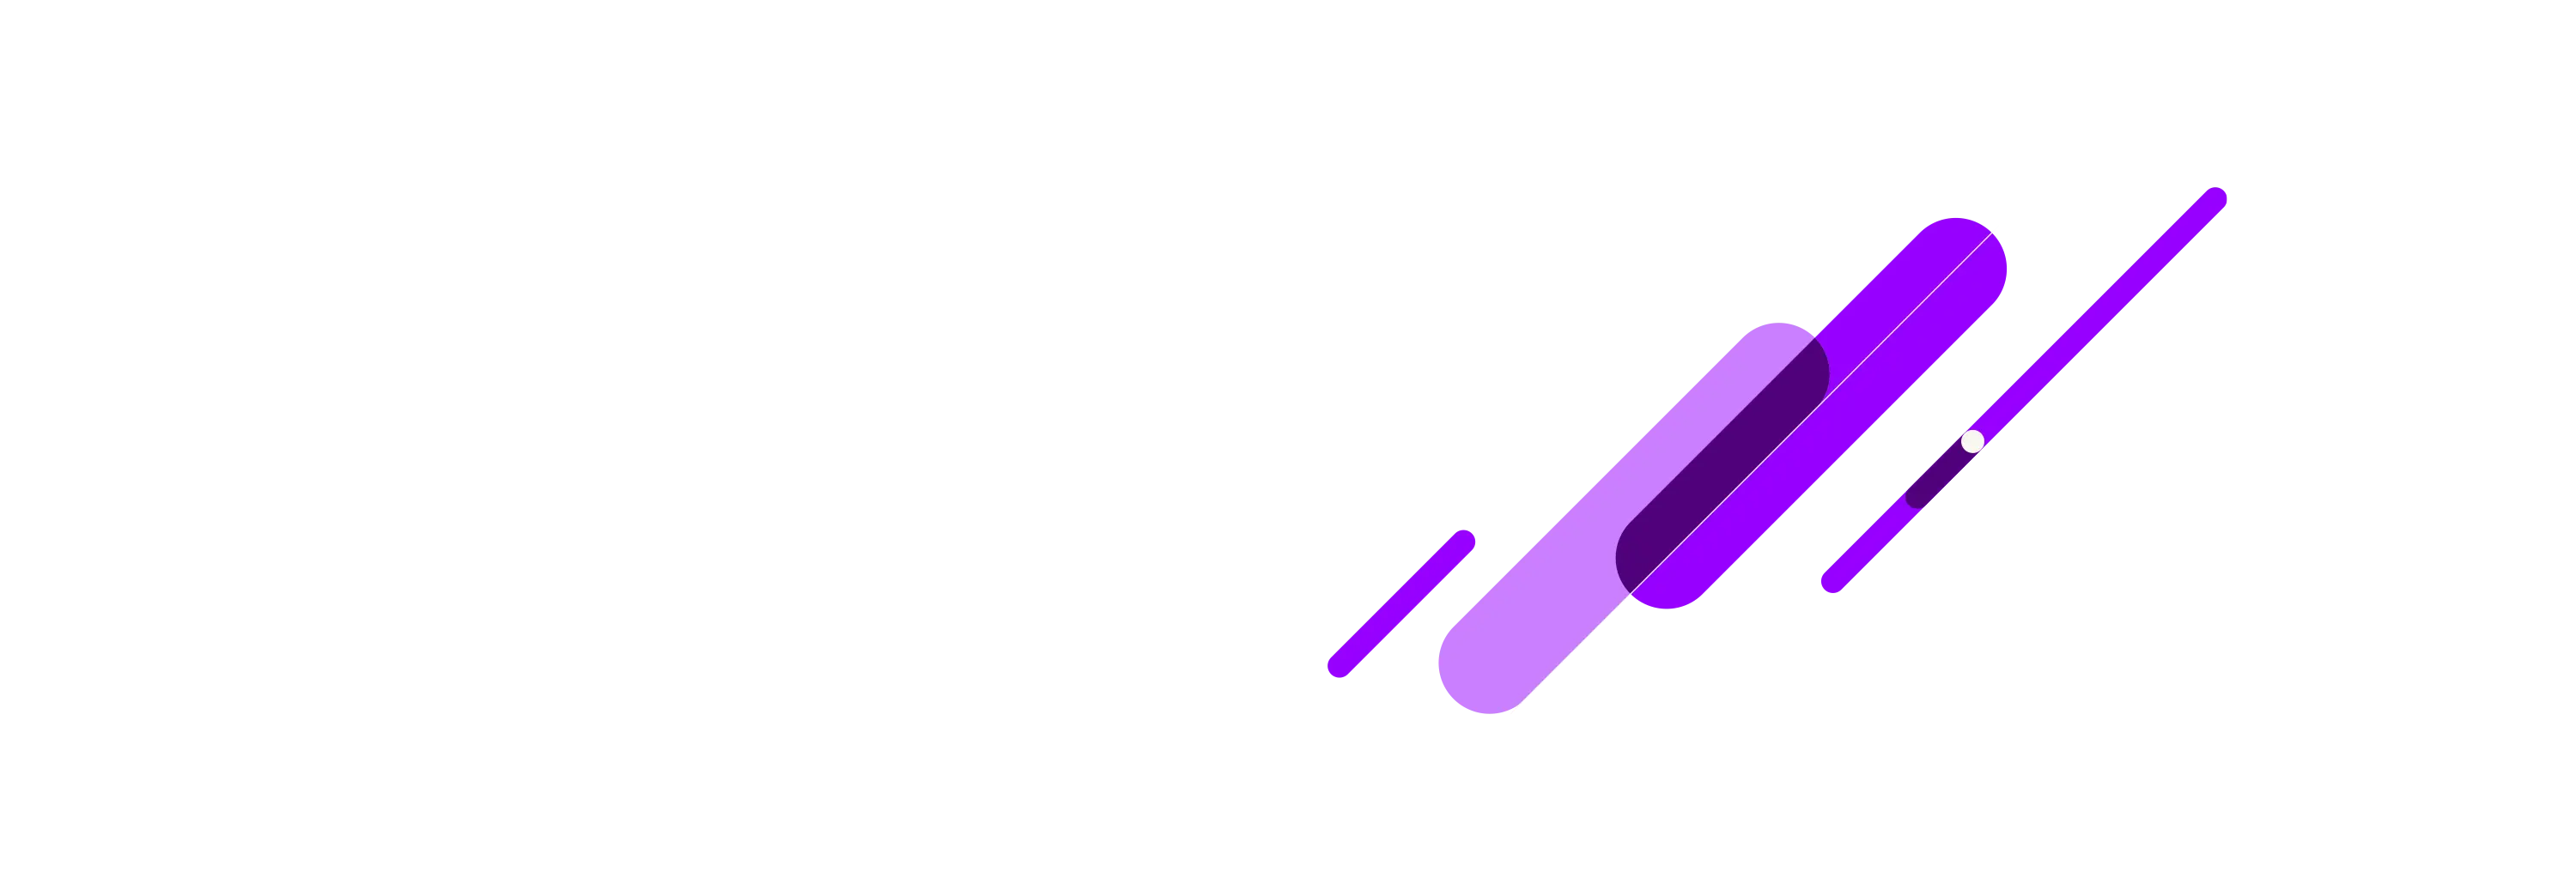 diagonal purple strokes illustration 